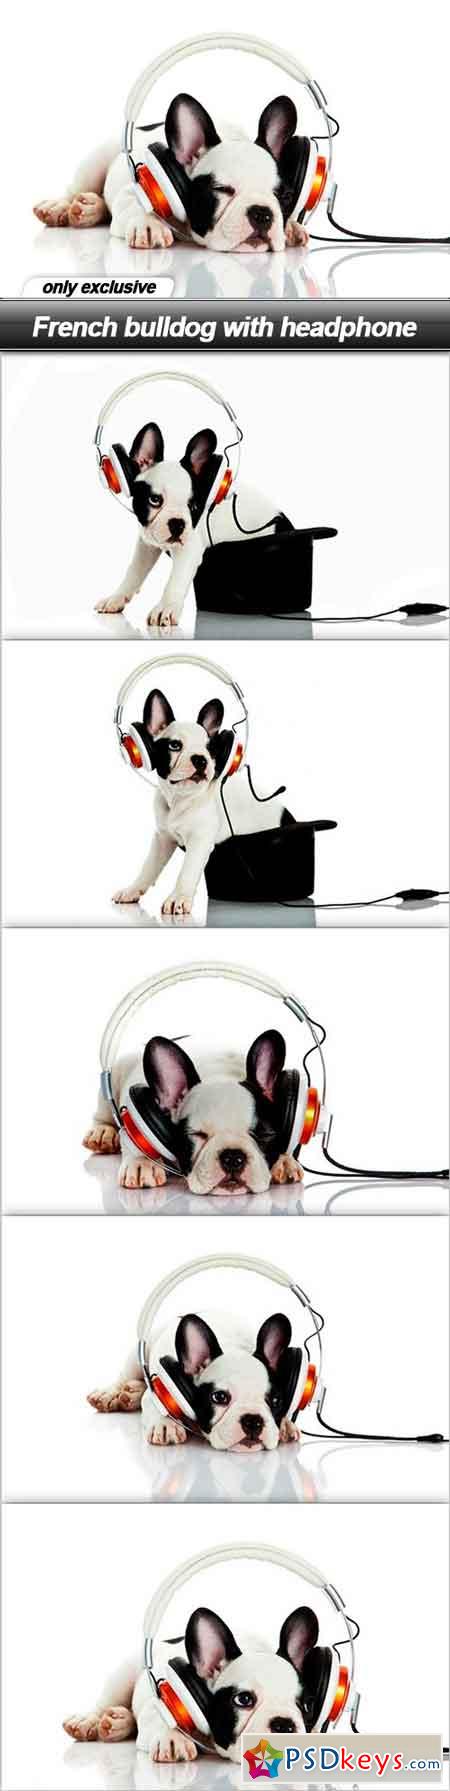 French bulldog with headphone - 6 UHQ JPEG